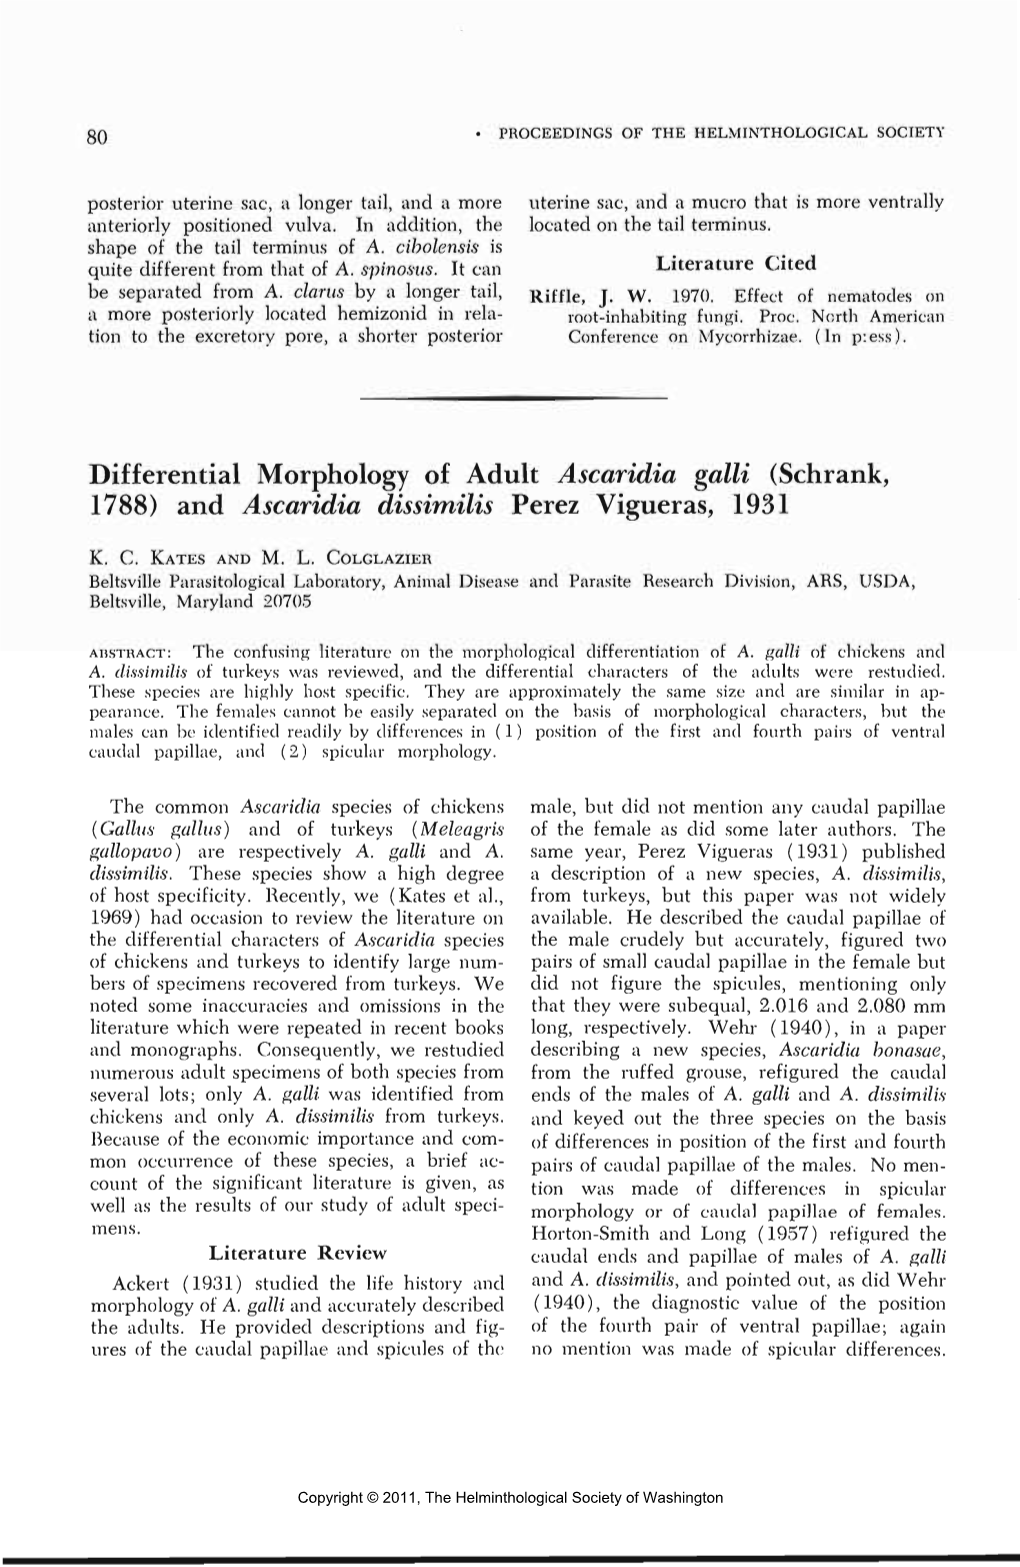 Differential Morphology of Adult Ascaridia Galli (Schrank, 1788) and Ascaridia Dissimilis Perez Vigueras, 1931